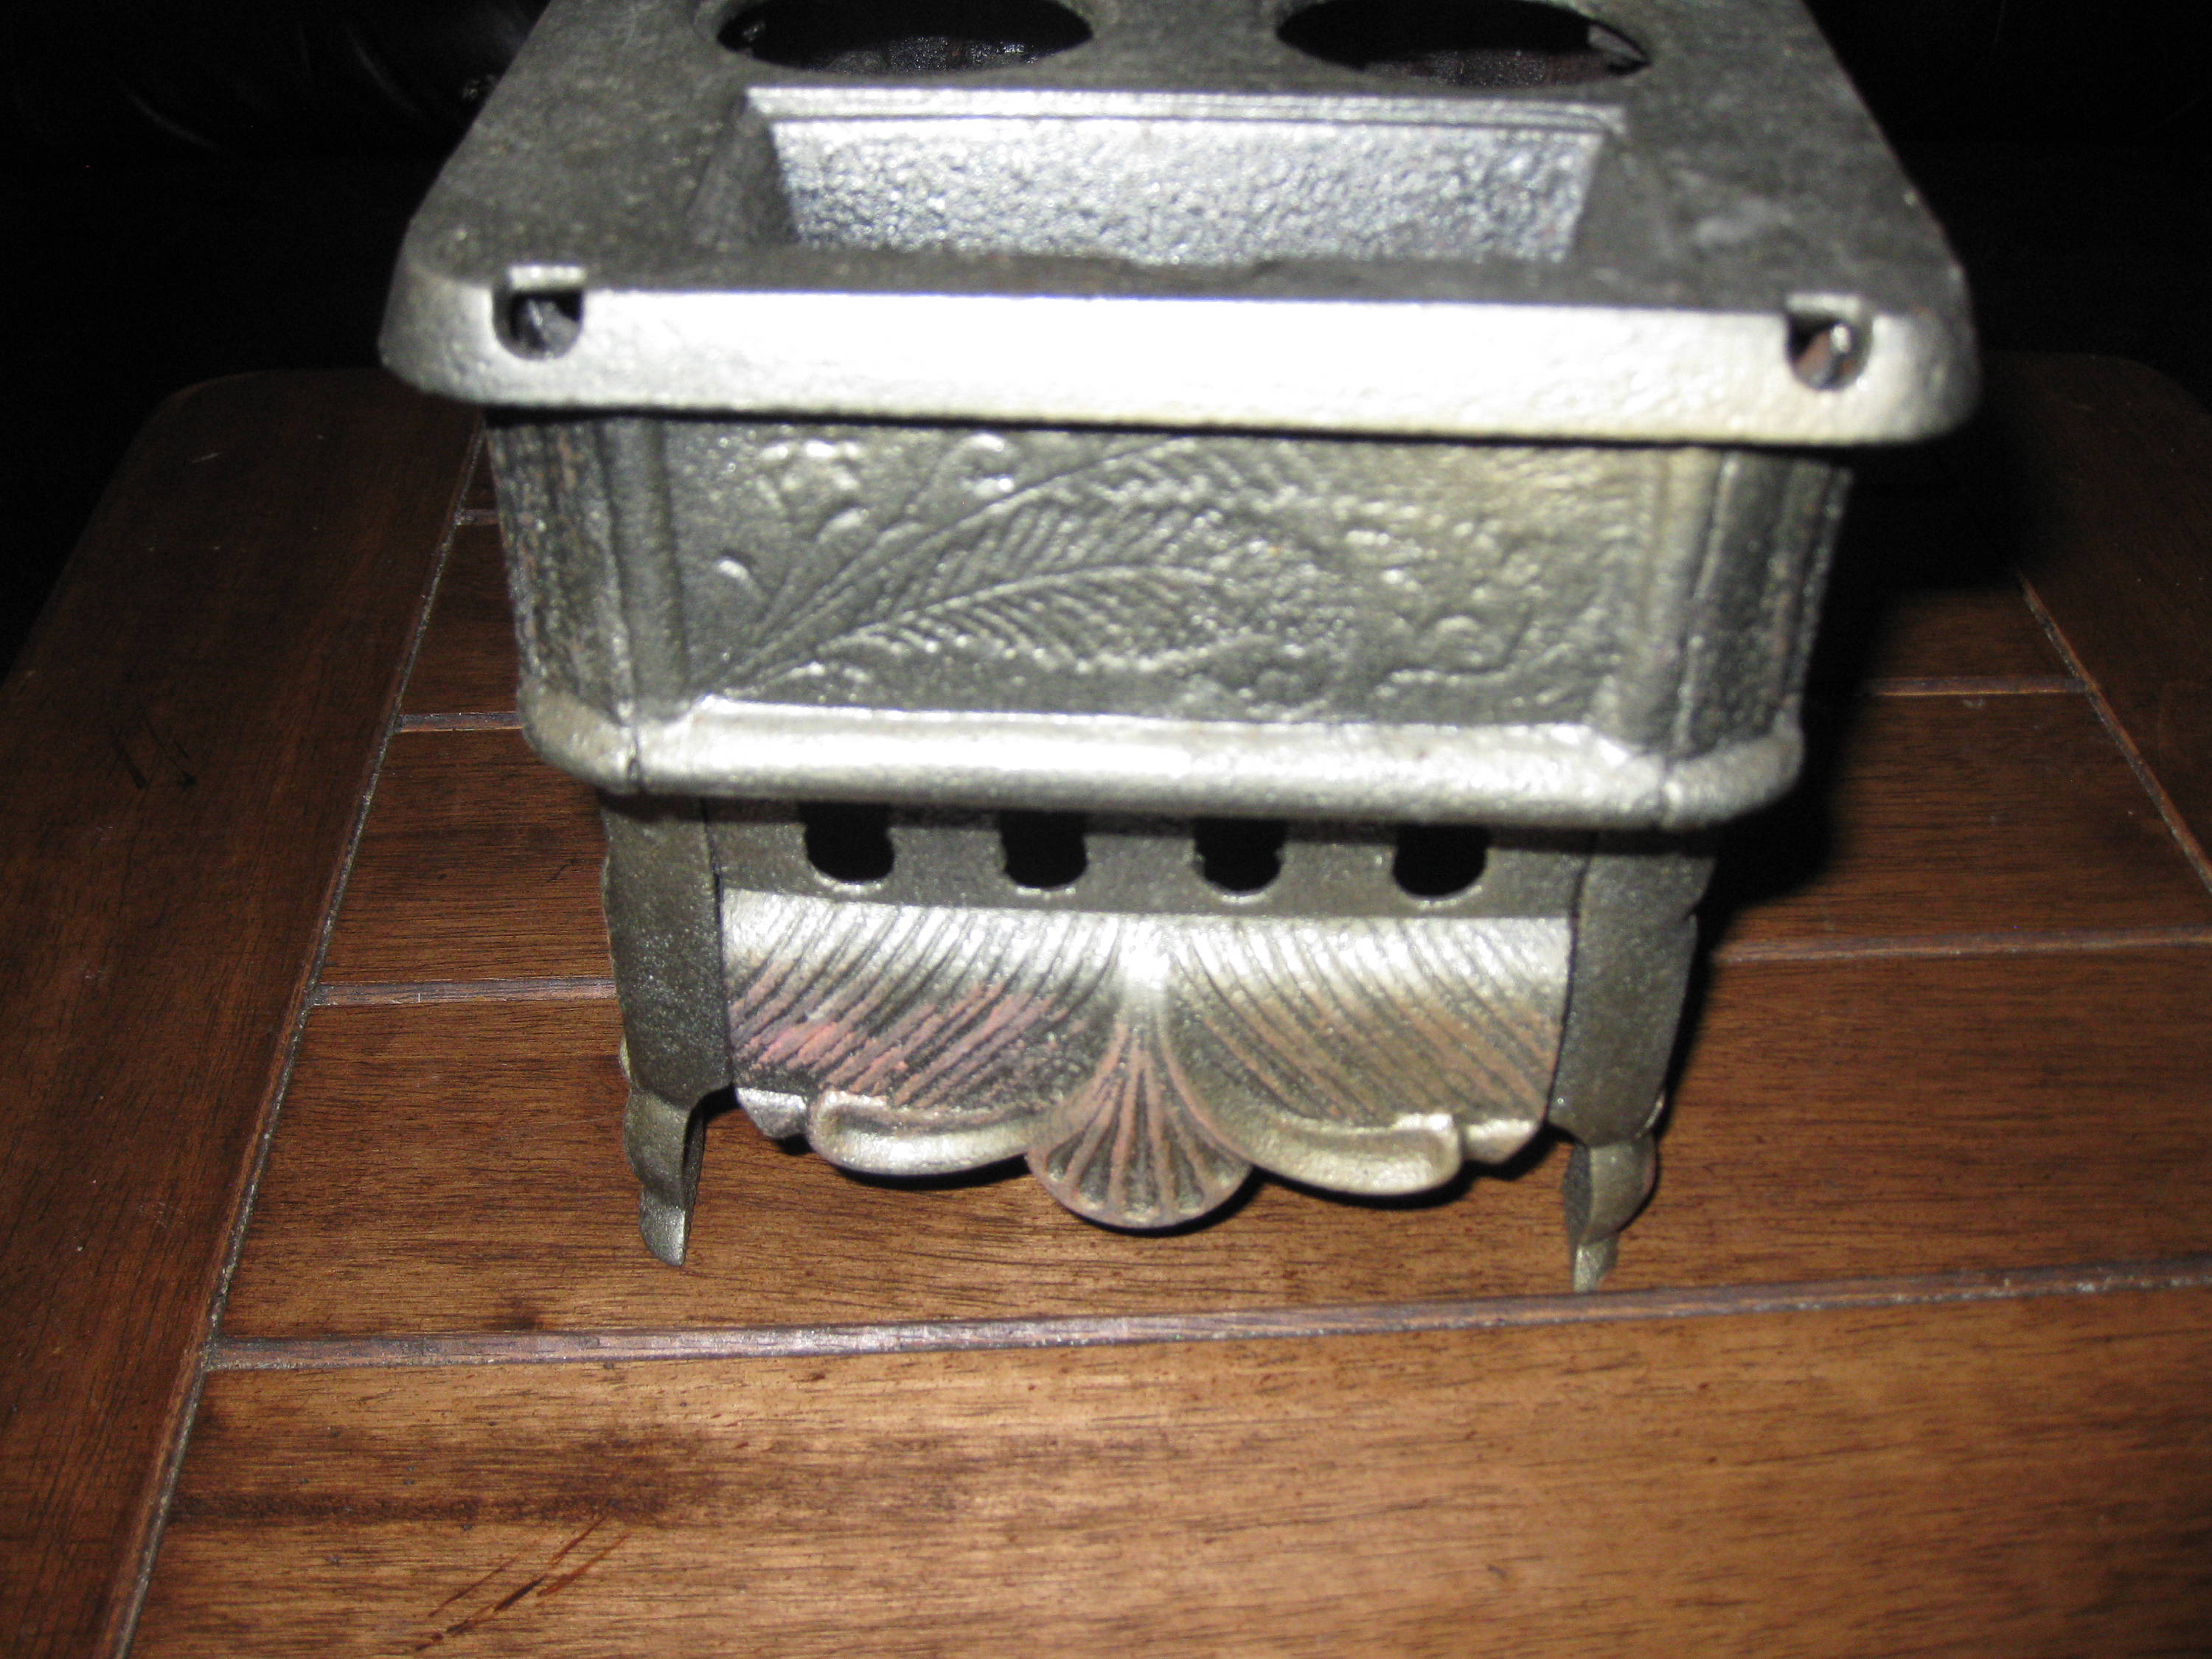 Miniature cast iron stove my grandma gave to my nieces : r/castiron